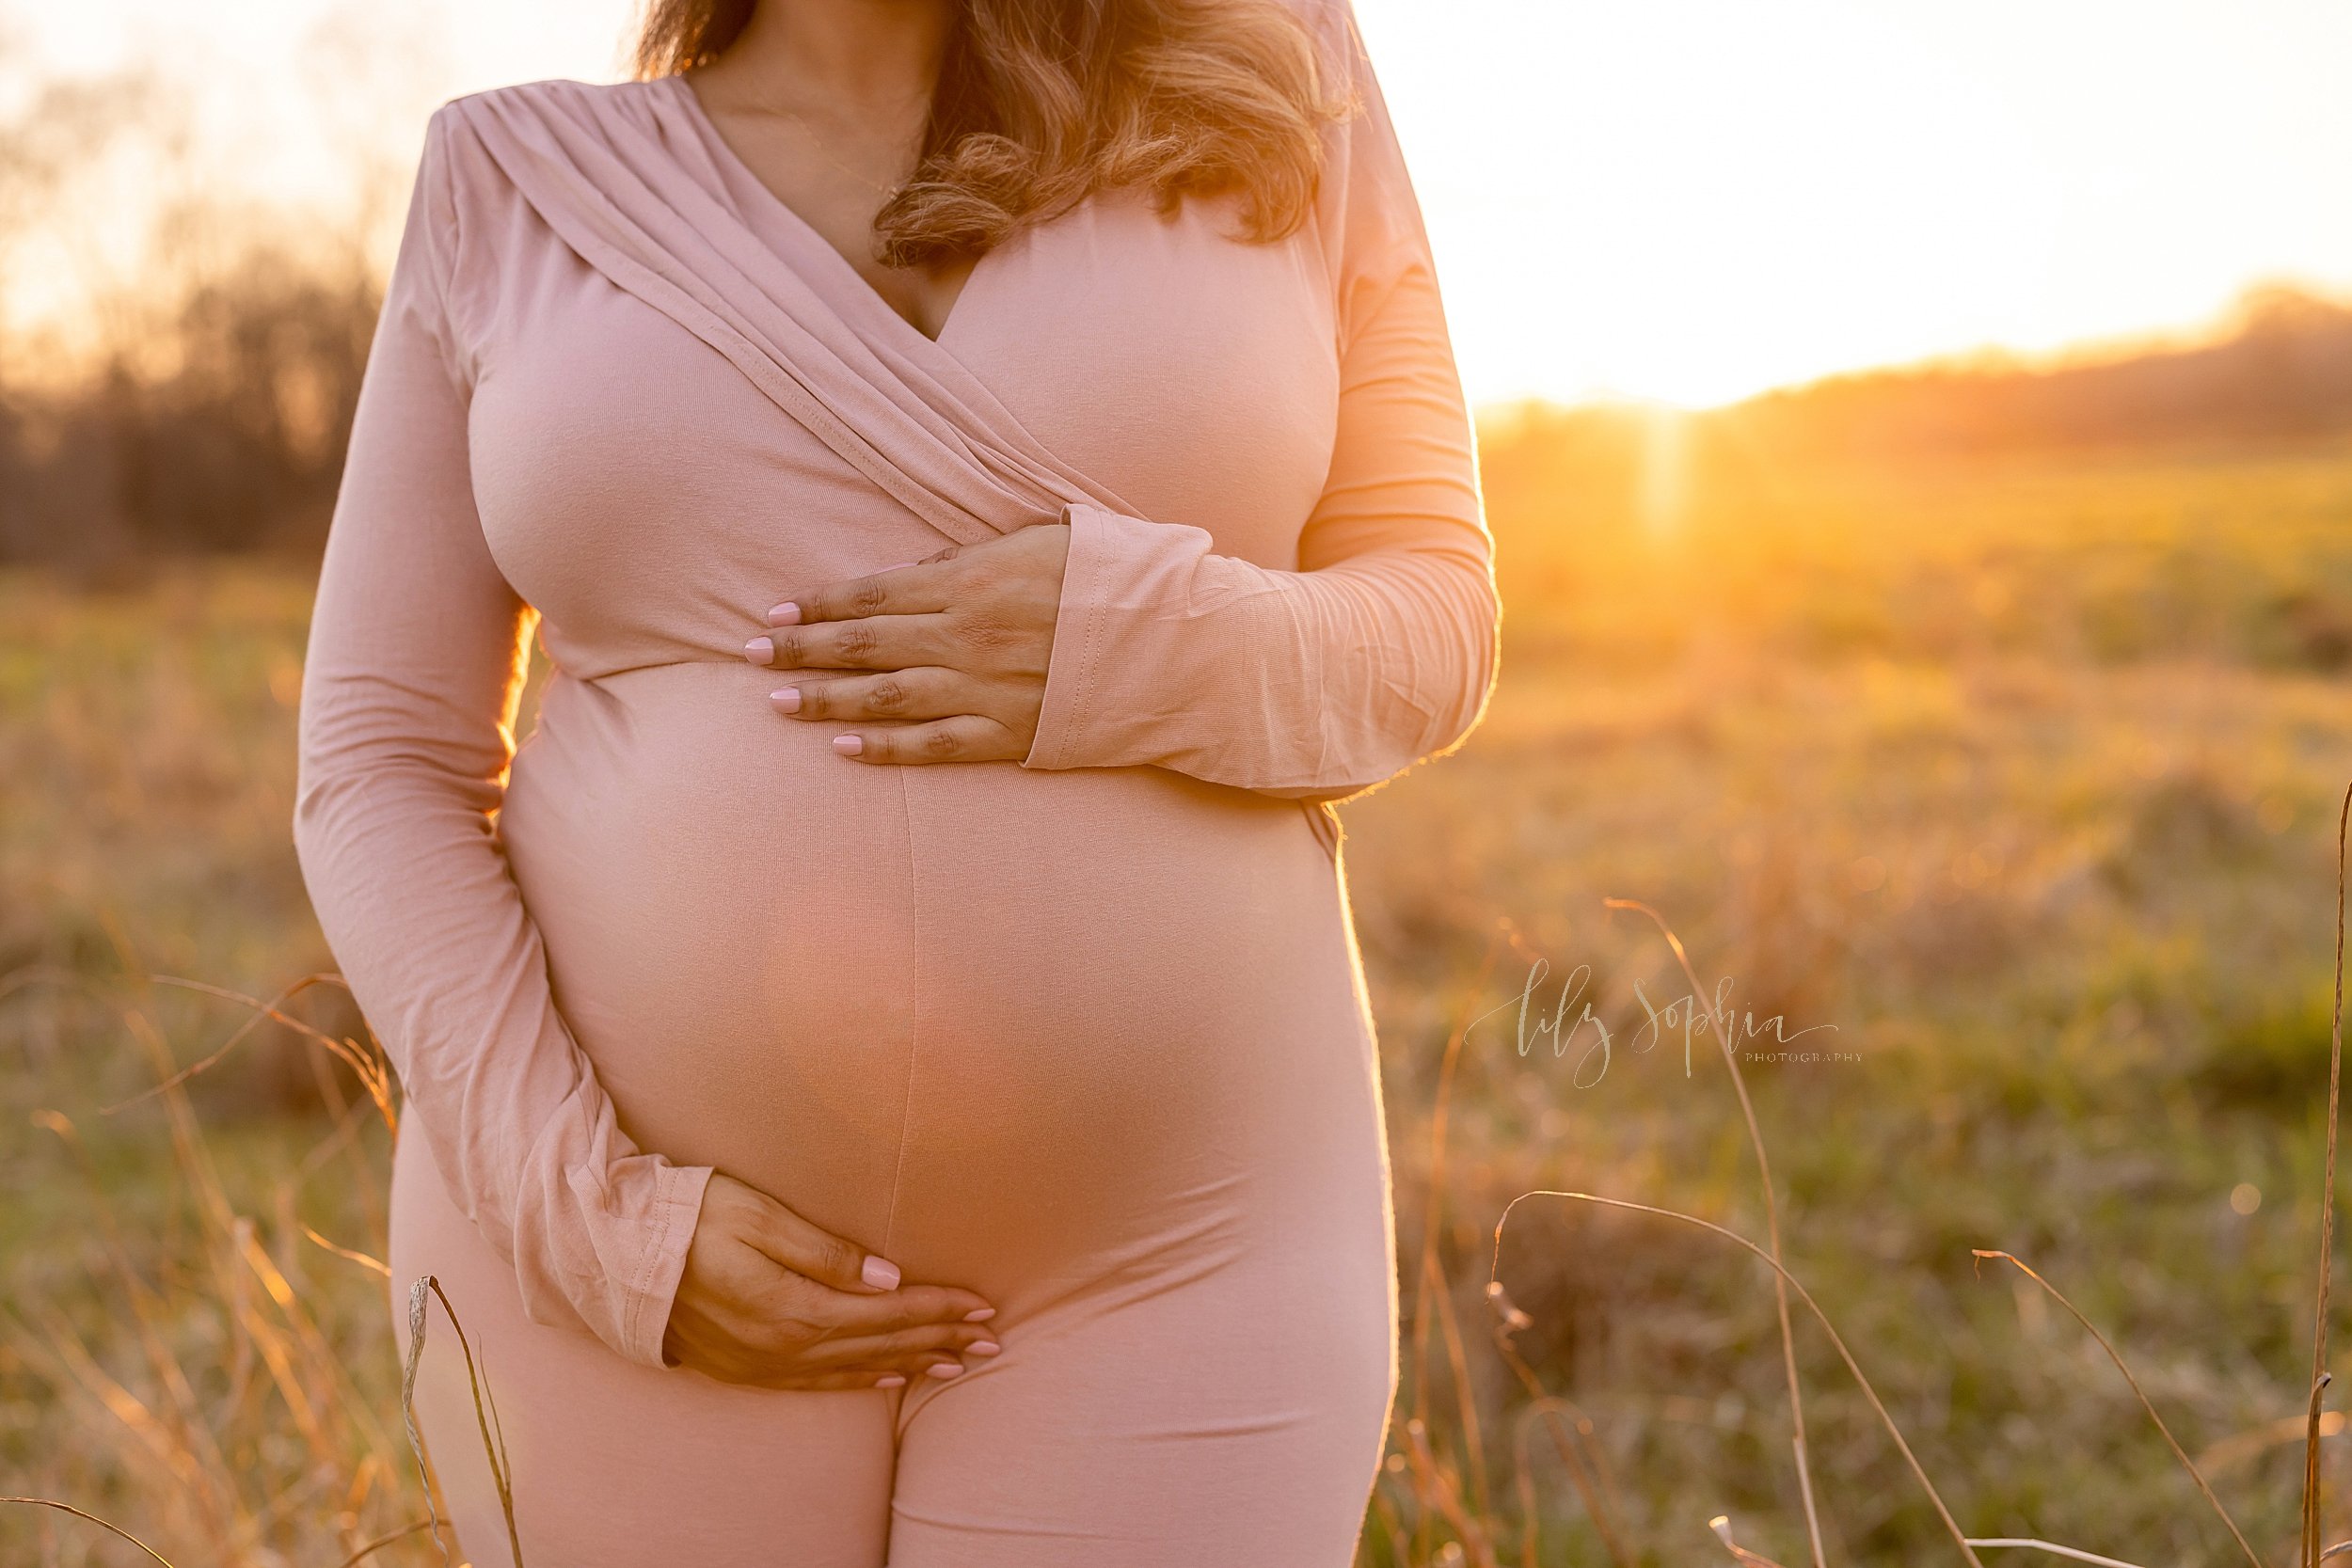 atlanta-pregnancy-photos-expecting-baby-girl-maternity-photoshoot-lawrenceville-oakhurst-decatur-kirkwood--brookhaven-buckhead-smyrna-mableton-midtown-virginia-highlands_8772.jpg